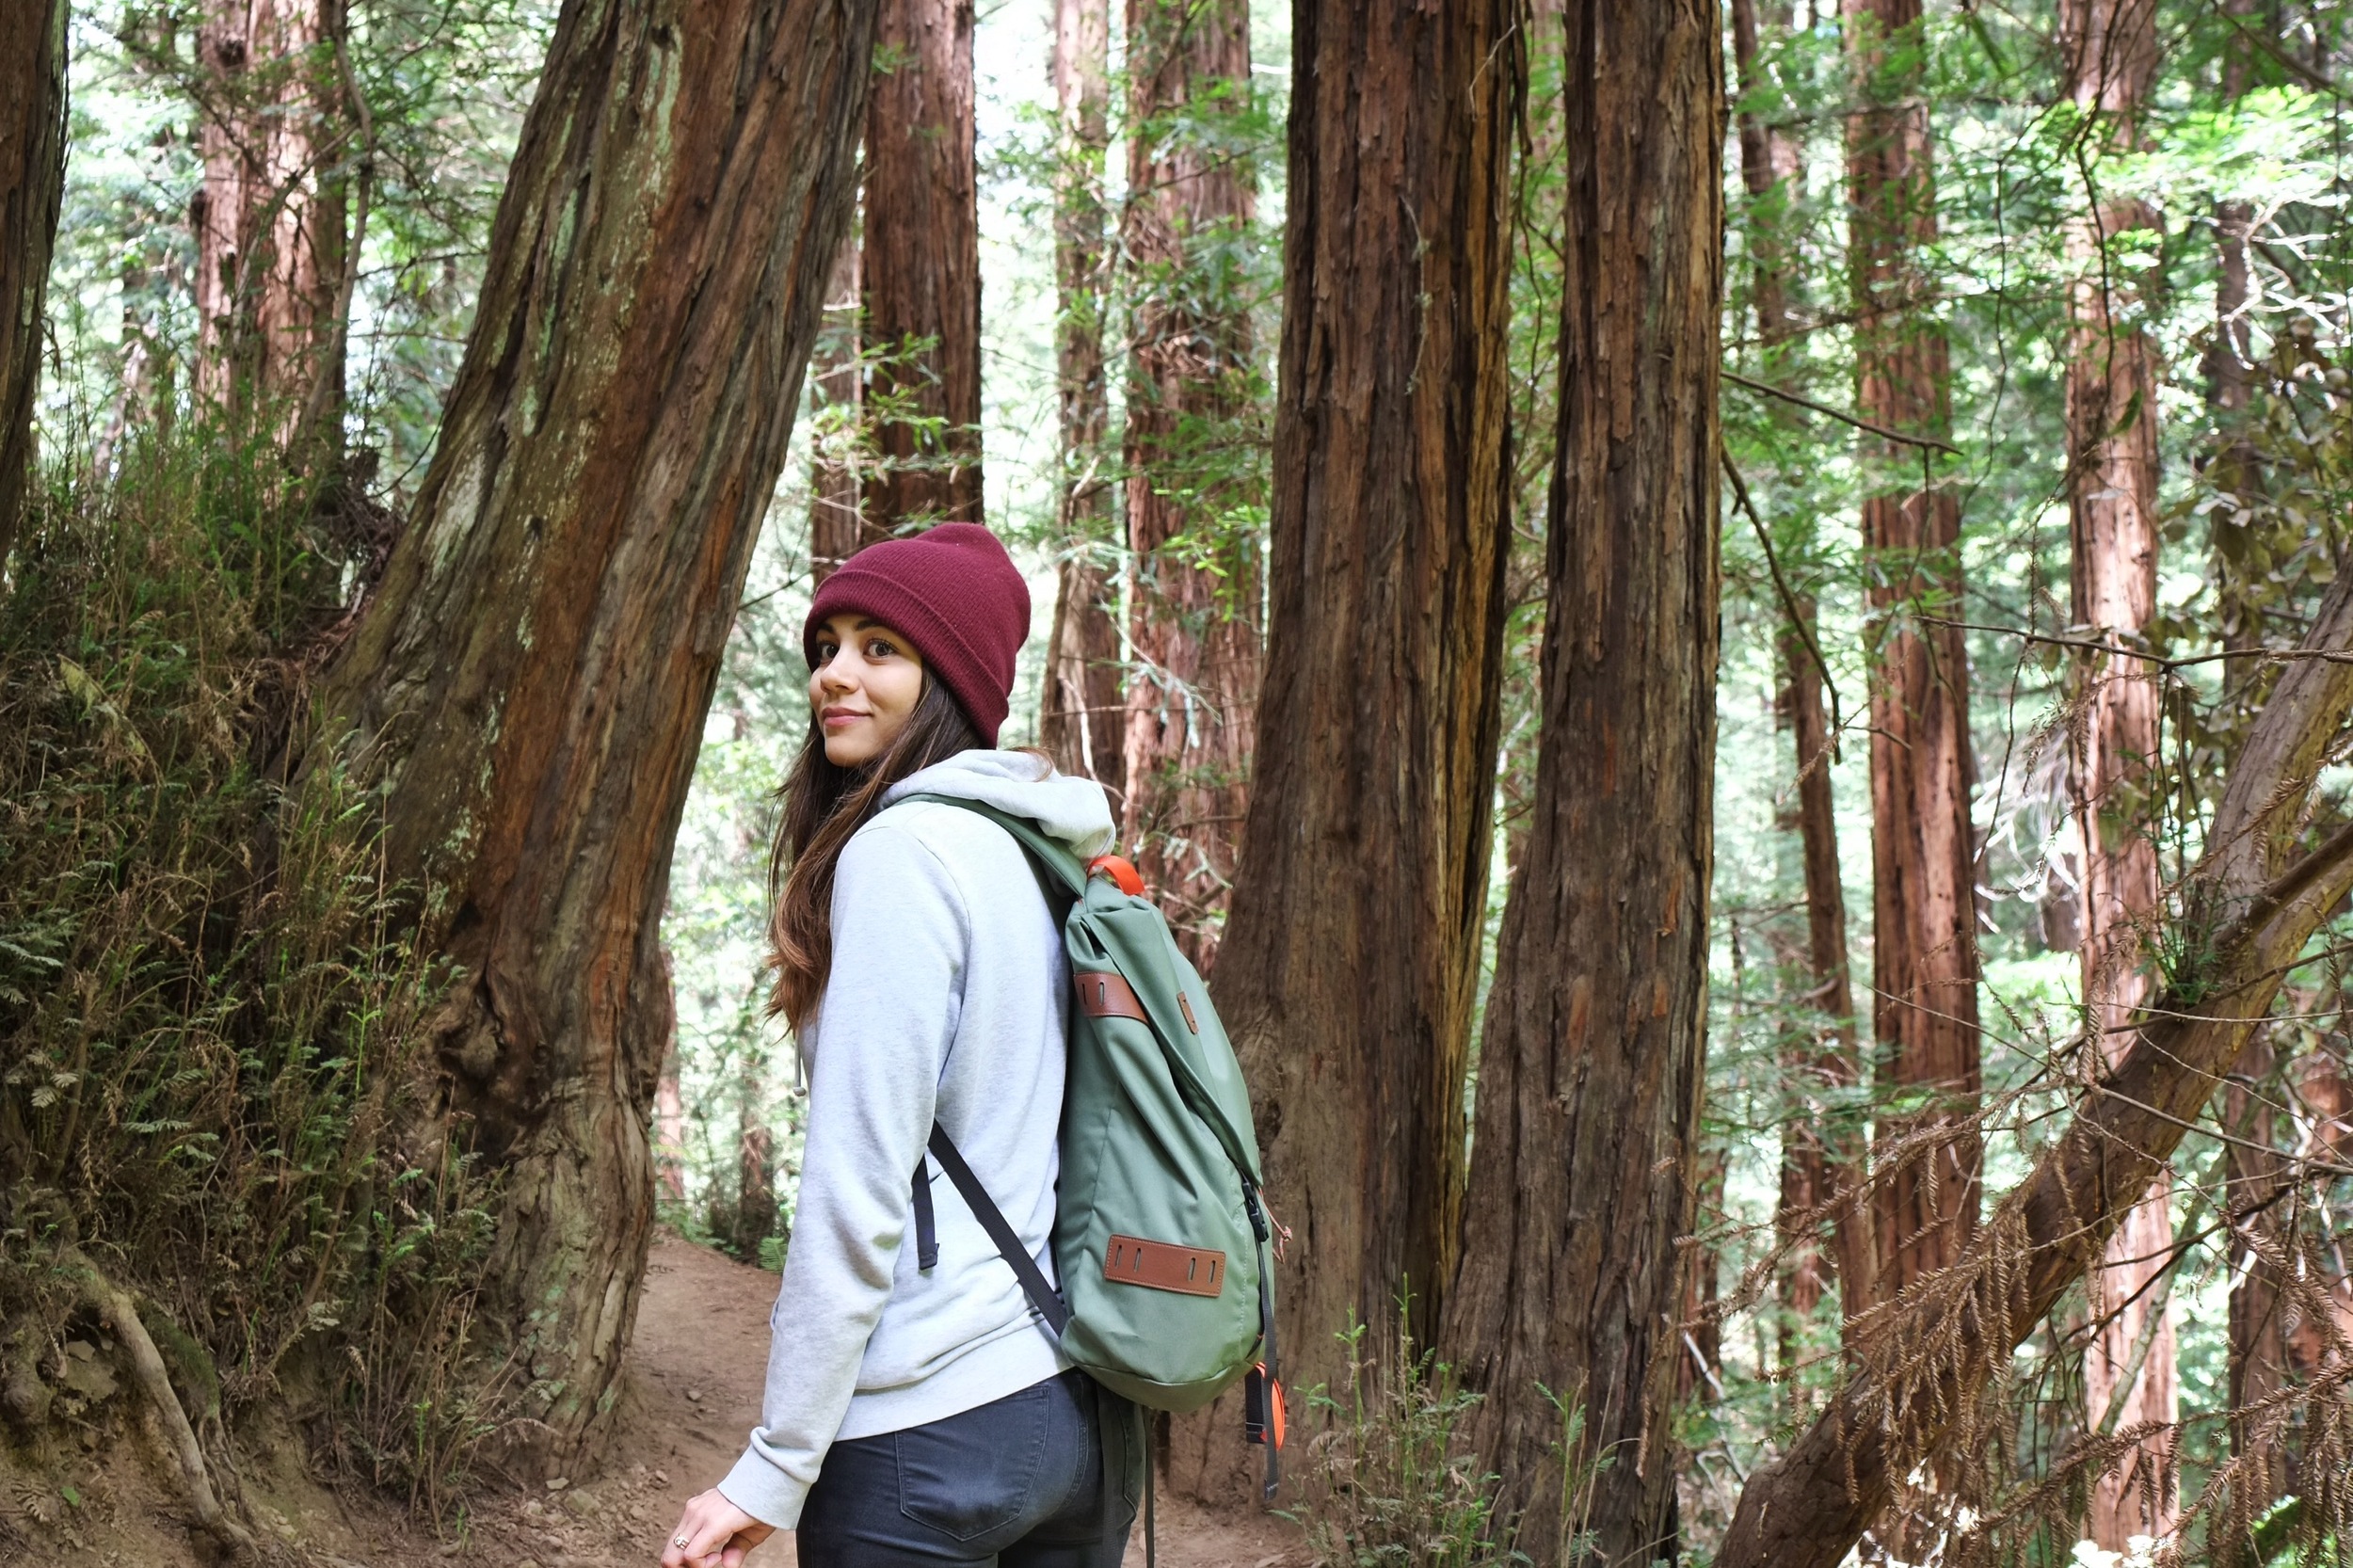  Muir Woods National Monument - coastal redwoods 